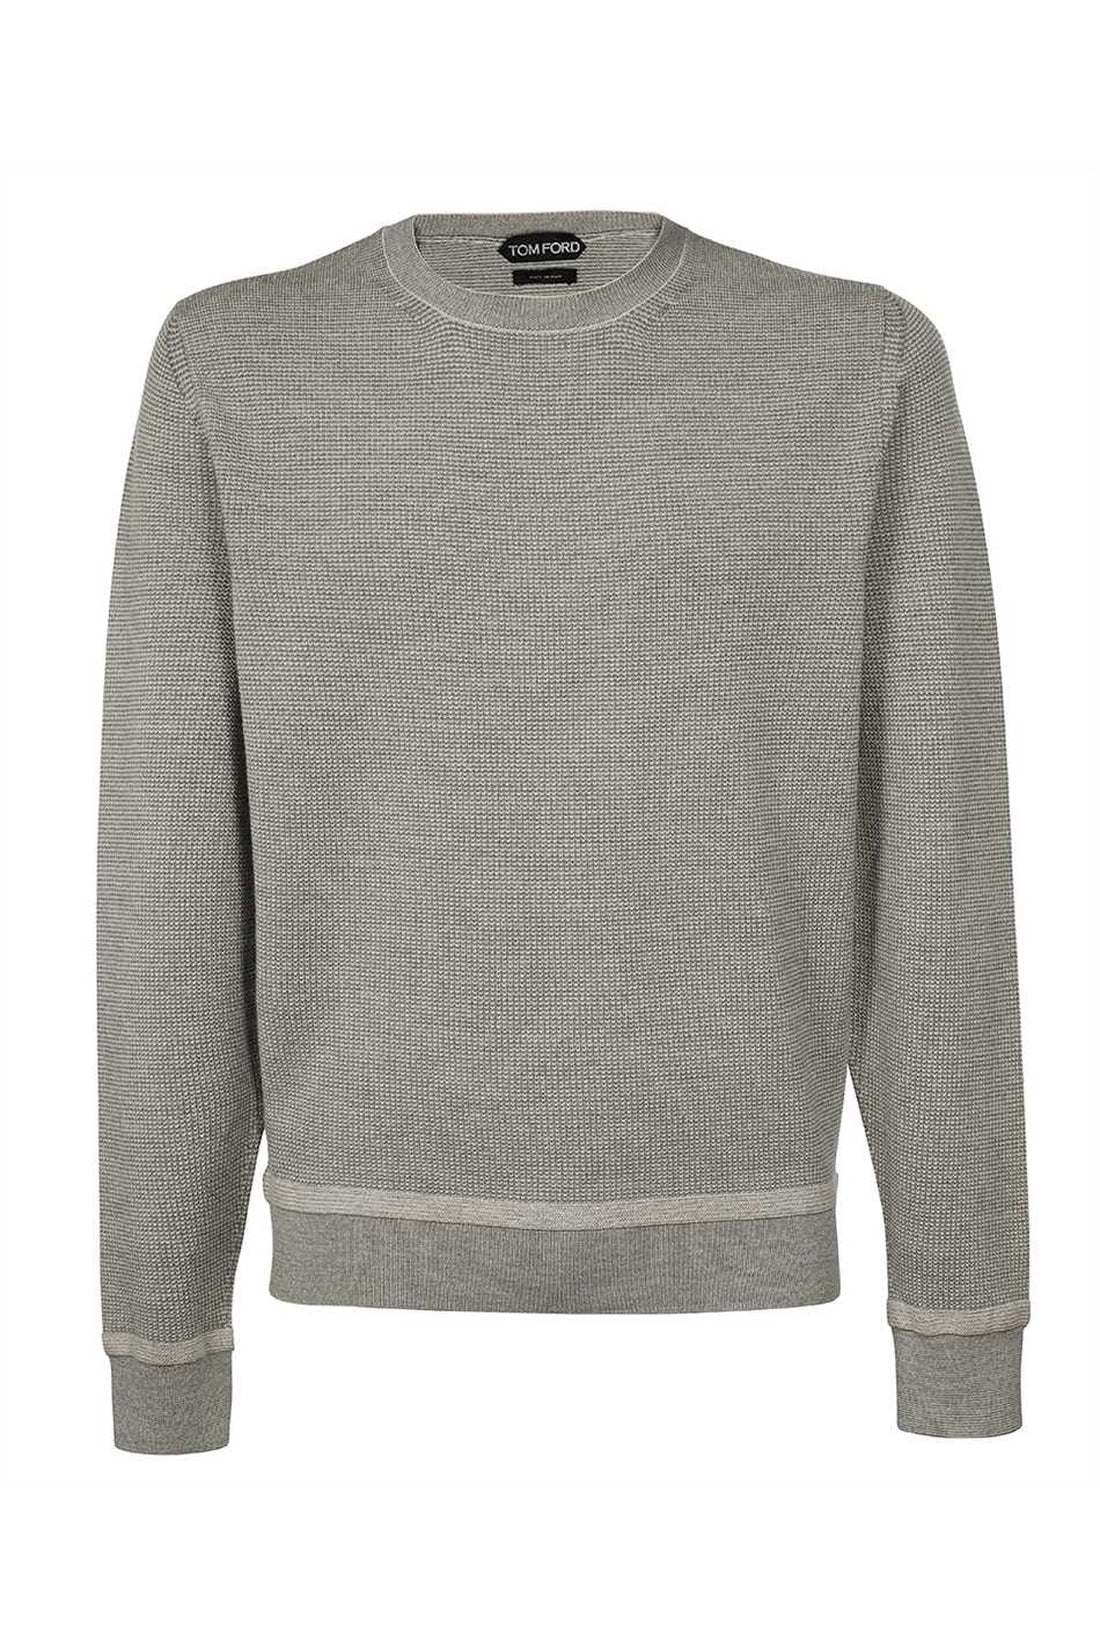 Tom Ford-OUTLET-SALE-Cotton-cashmere blend sweater-ARCHIVIST